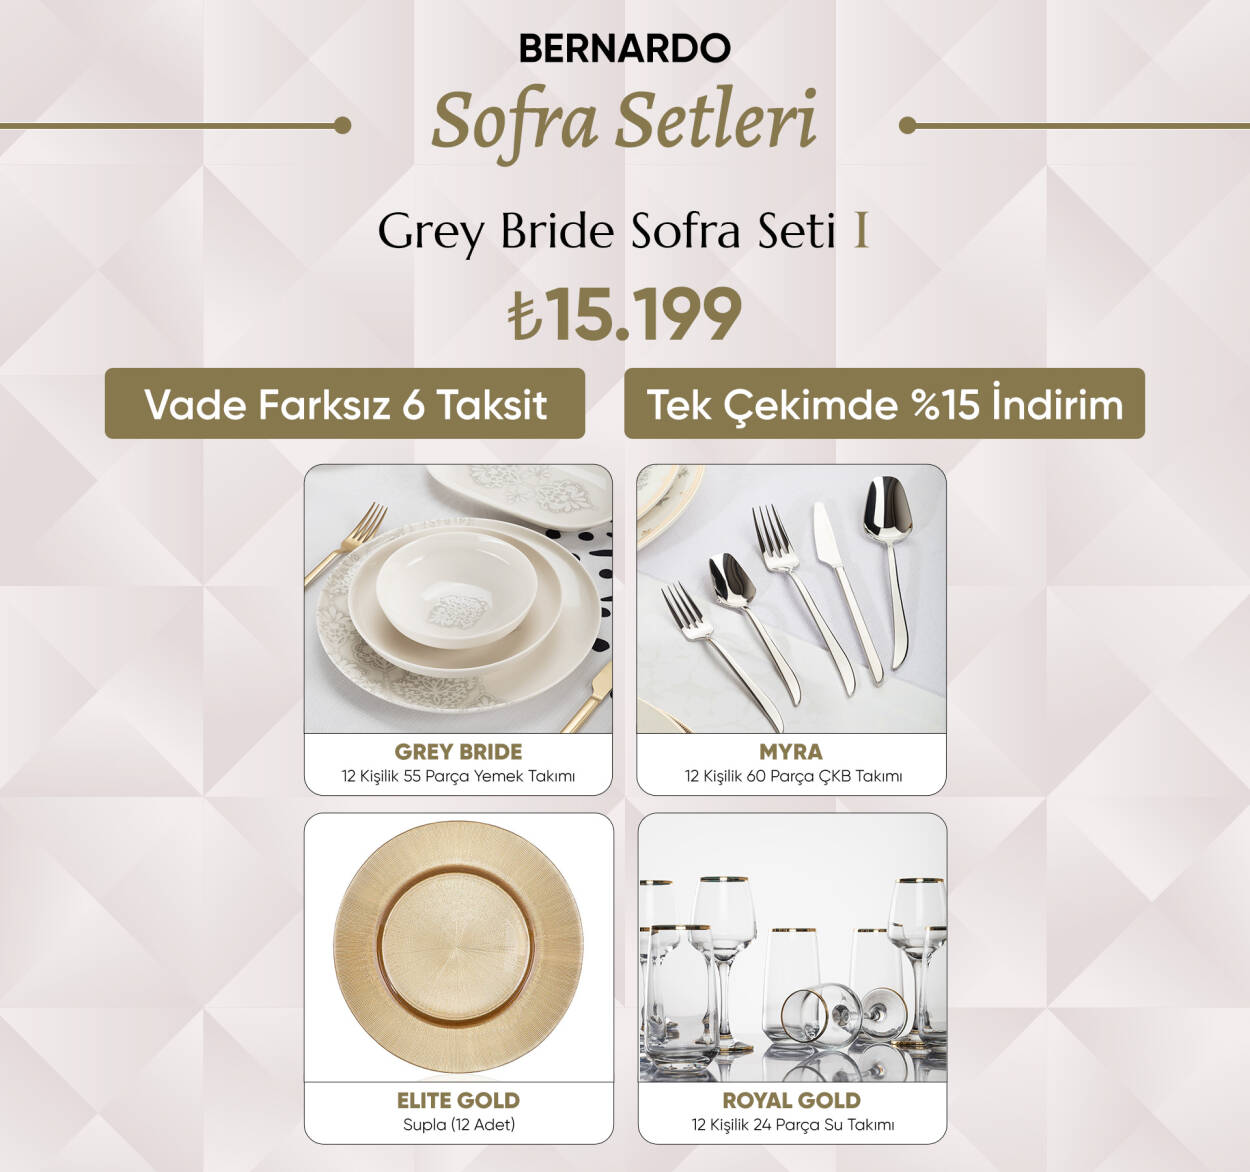 Grey Bride Sofra Seti Gold - 1